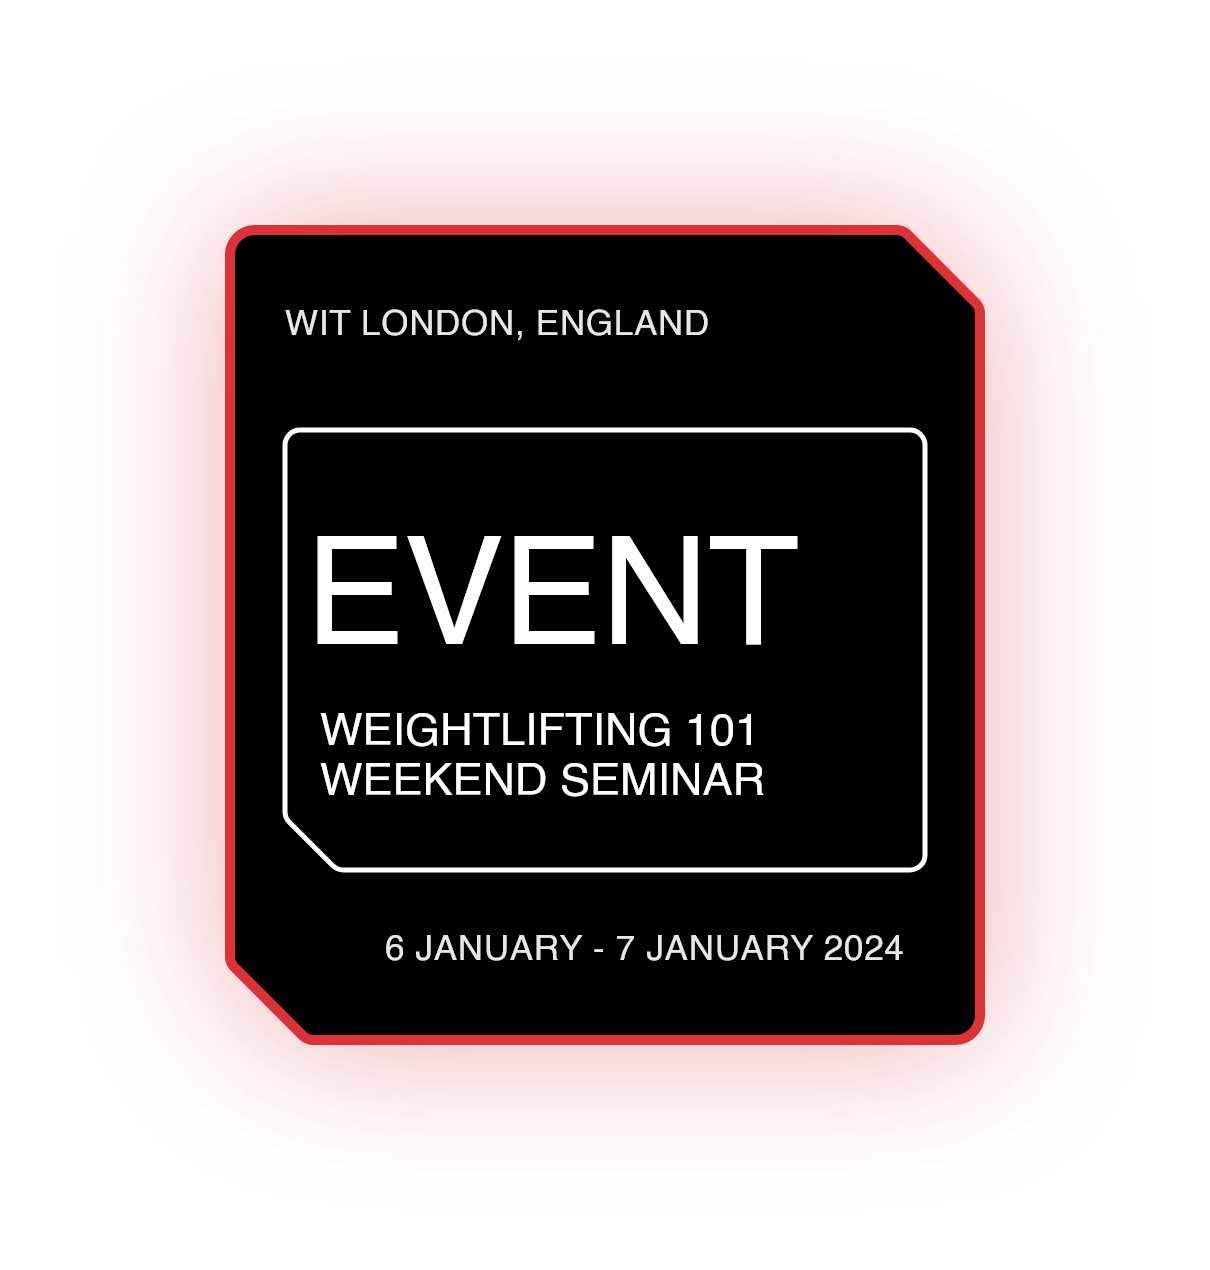 Weightlifting 101 Weekend Seminar - London, England